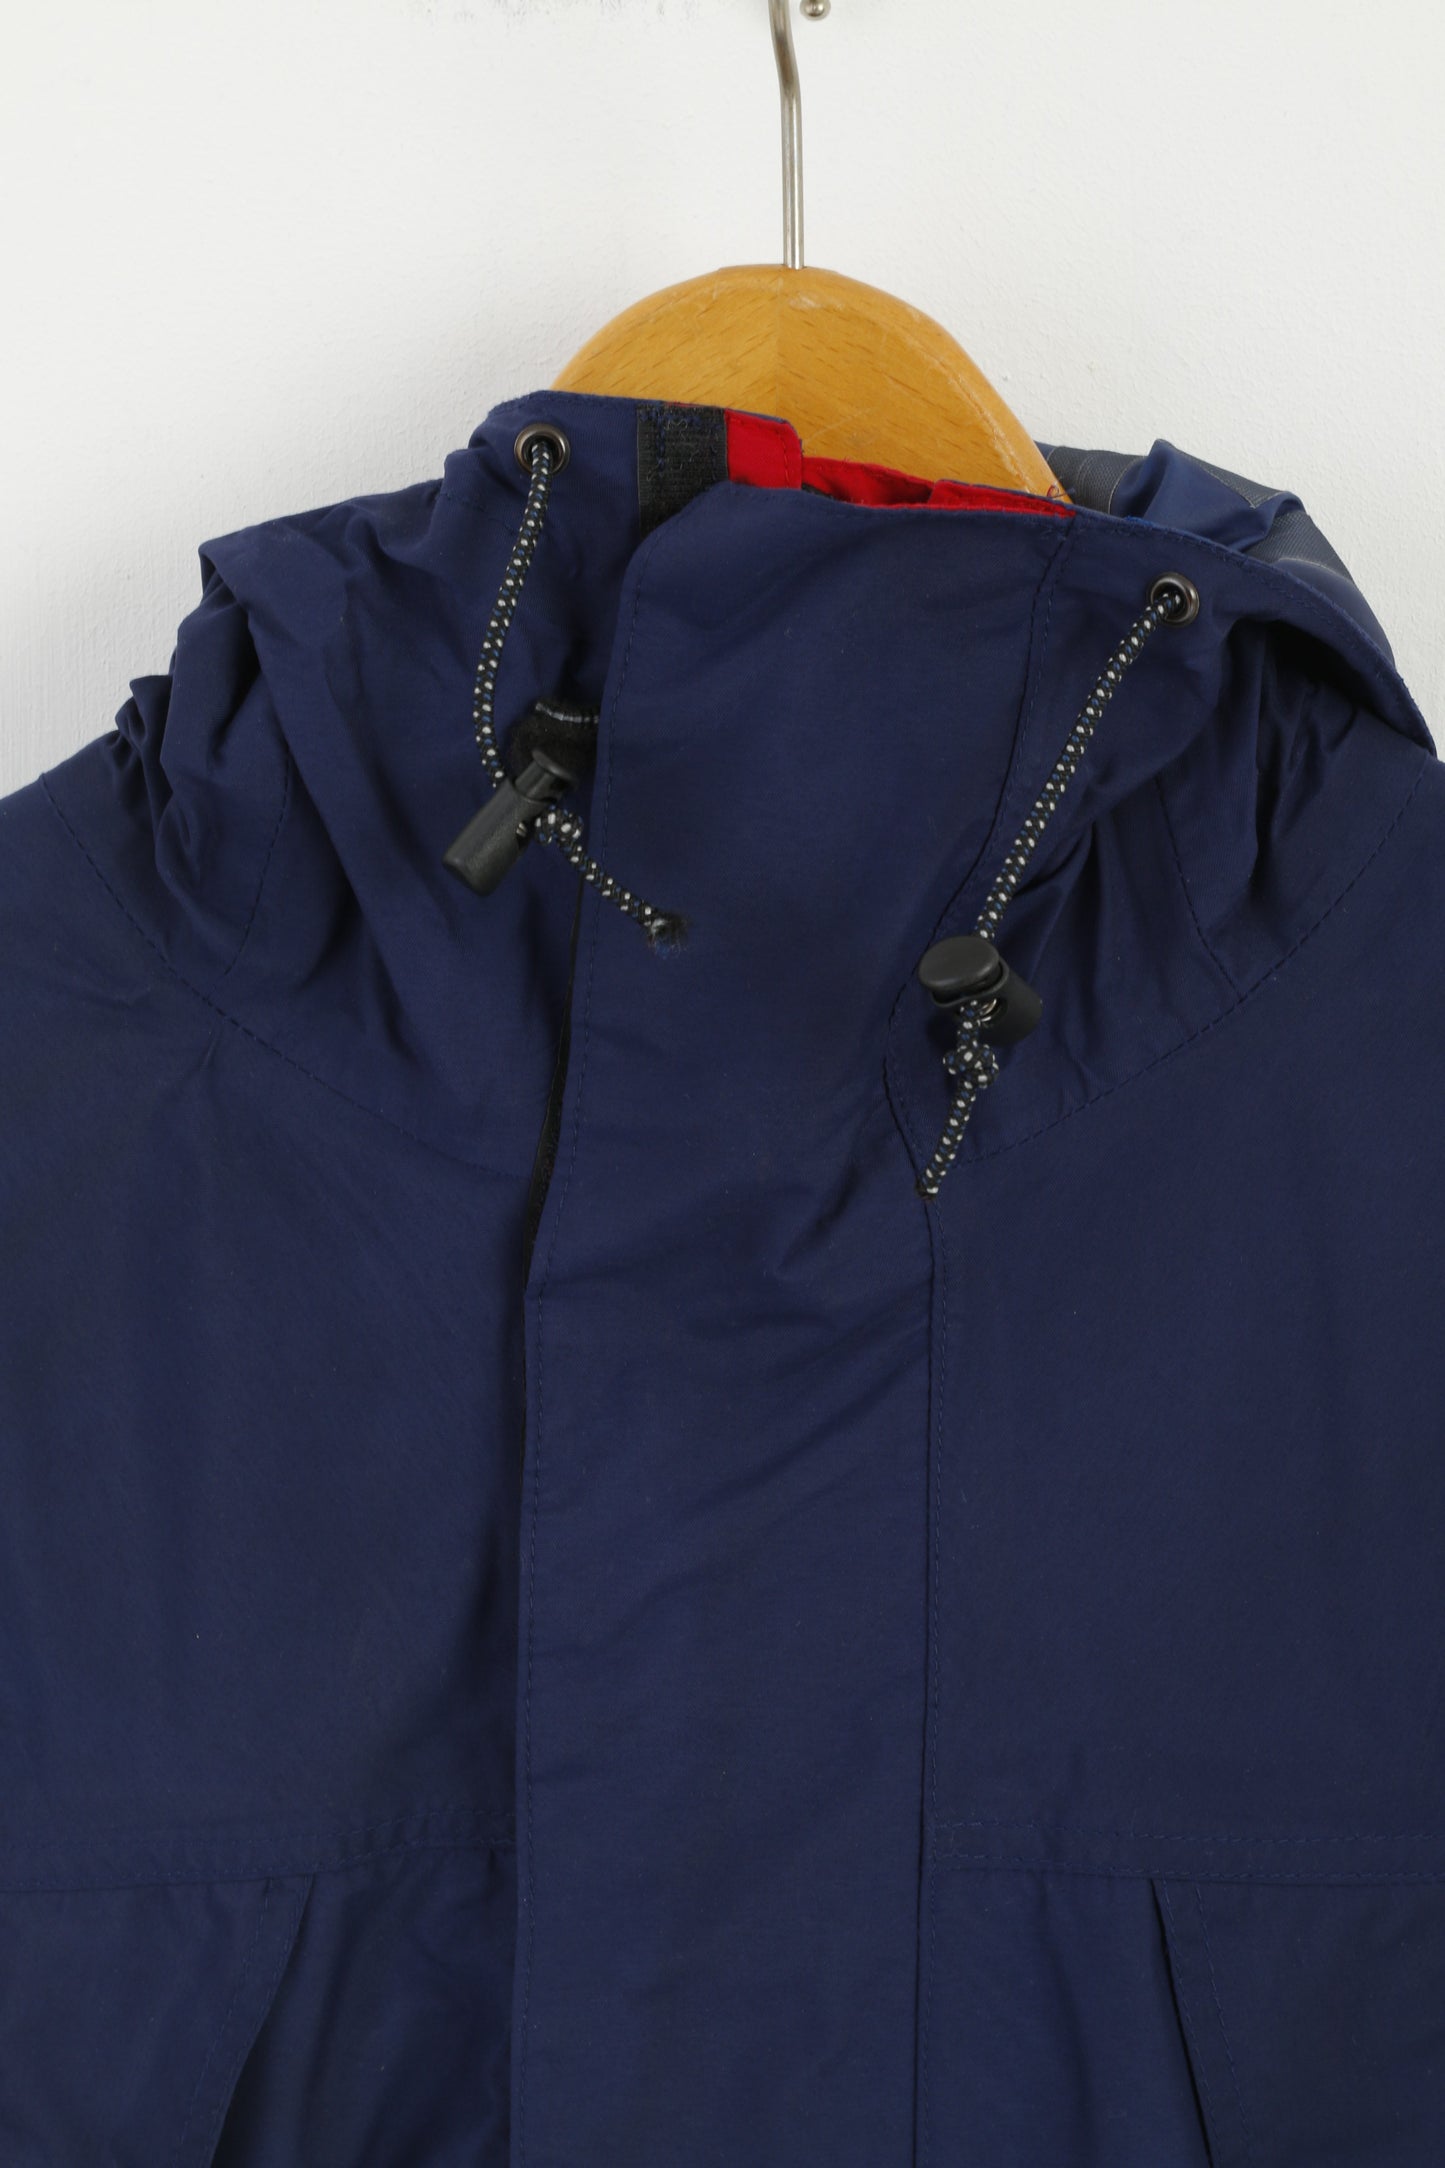 Spraway Men S Jacket Navy Hydro-Dry Nylon Outdoor Hooded Rain Top